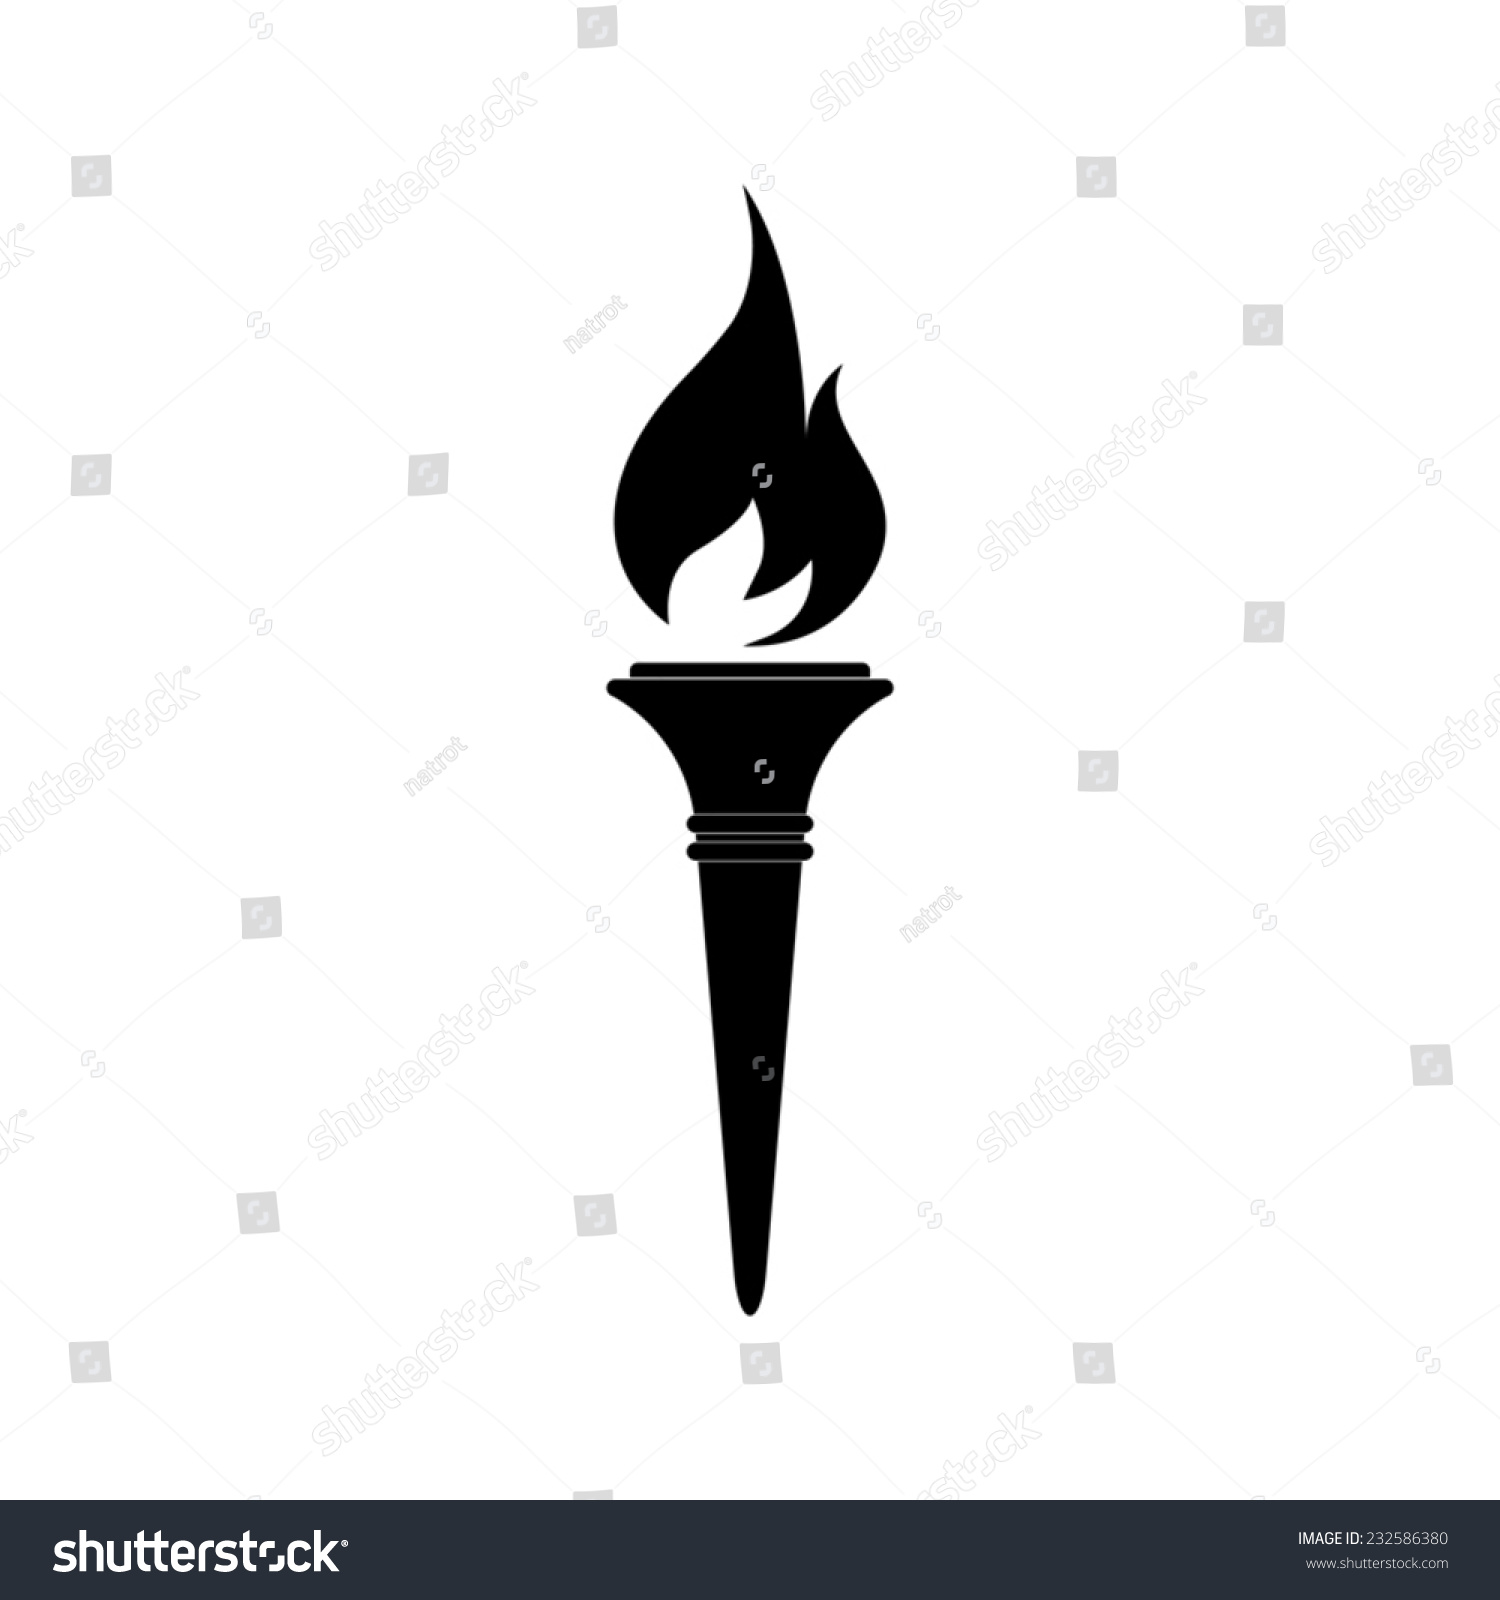 Torch Icon - Vector - 232586380 : Shutterstock